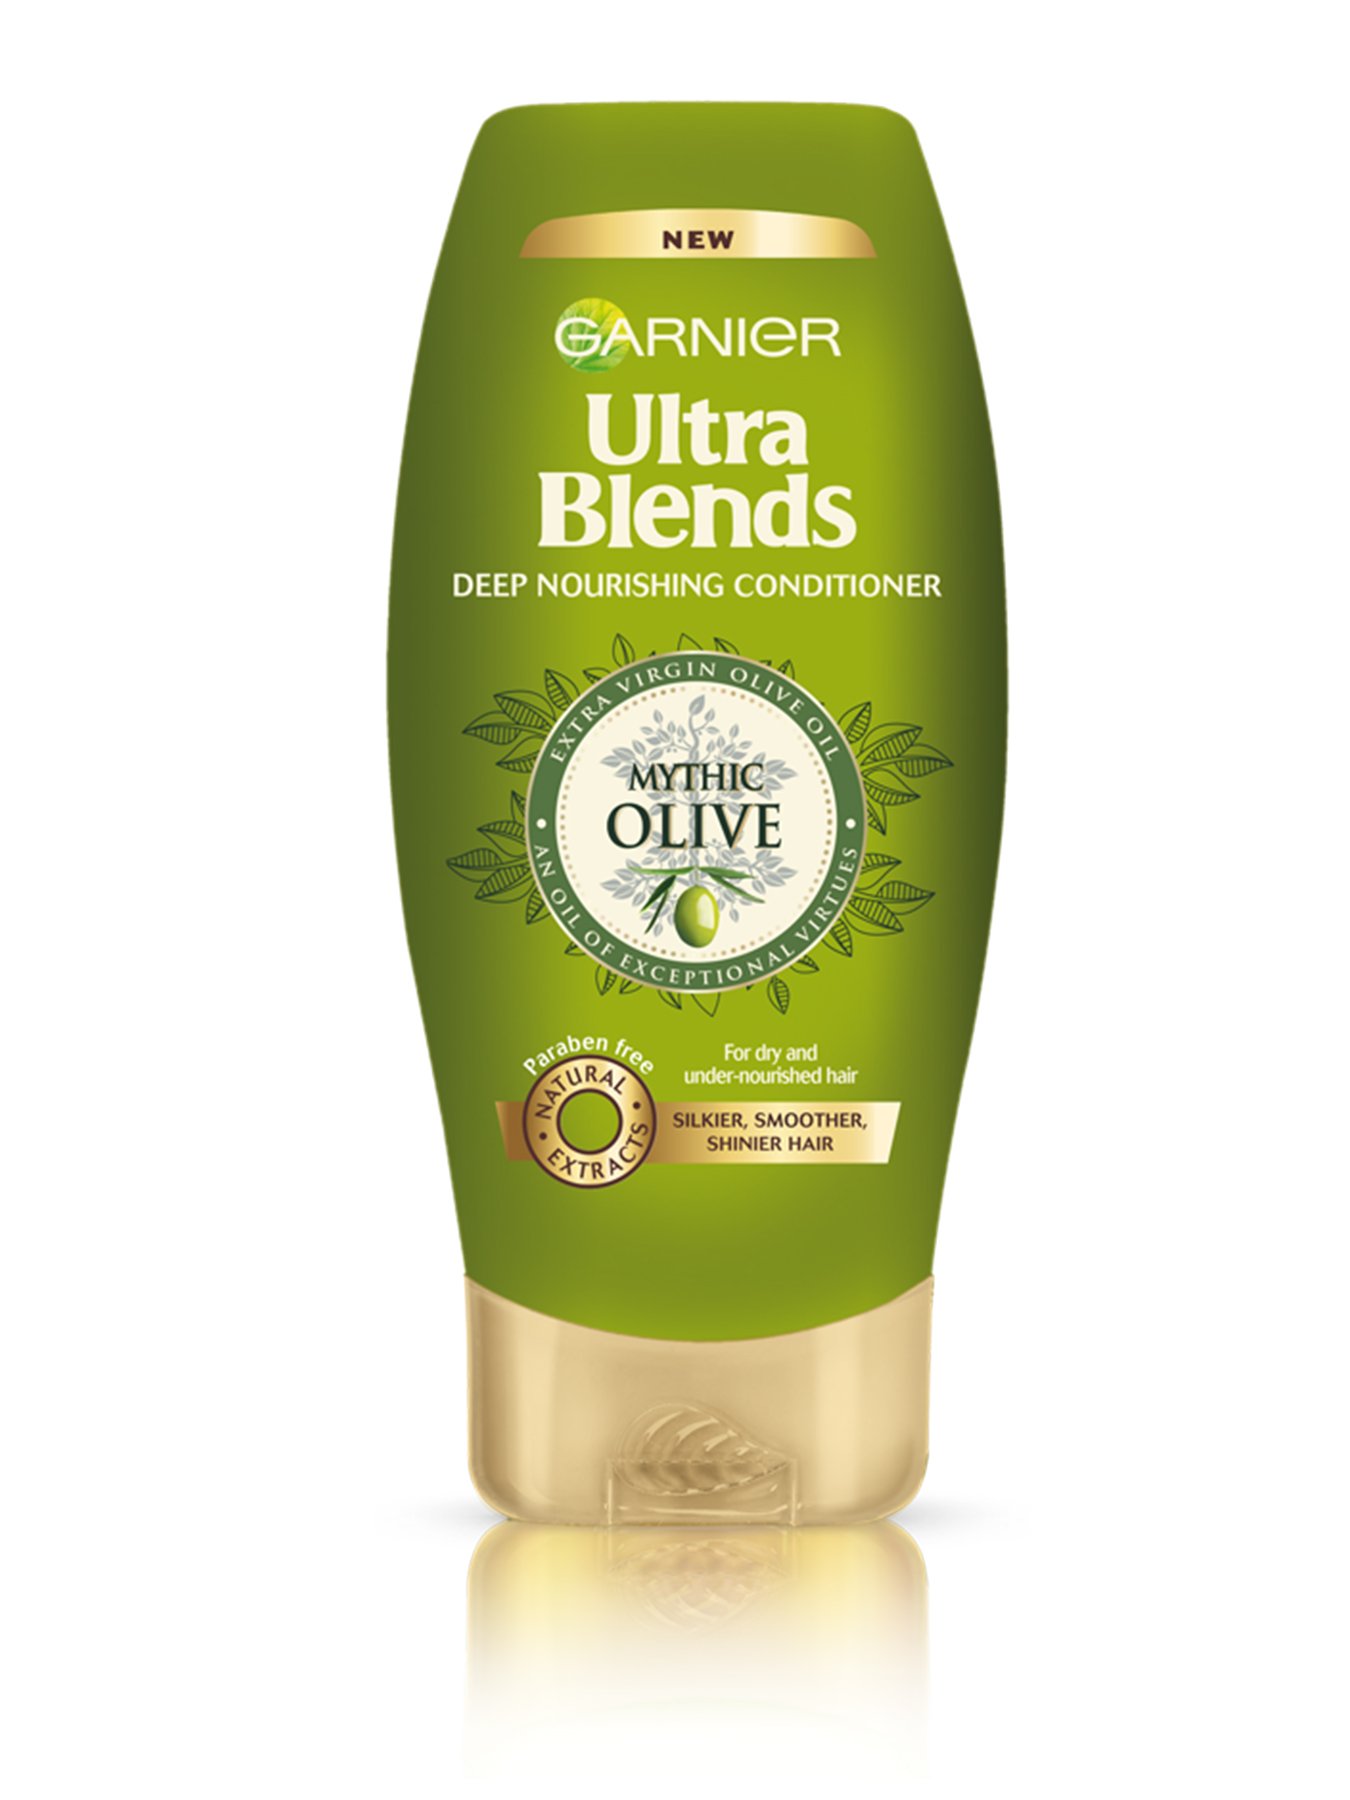 Garnier Ultra Blends Mythic Olive Conditioner 175 ml